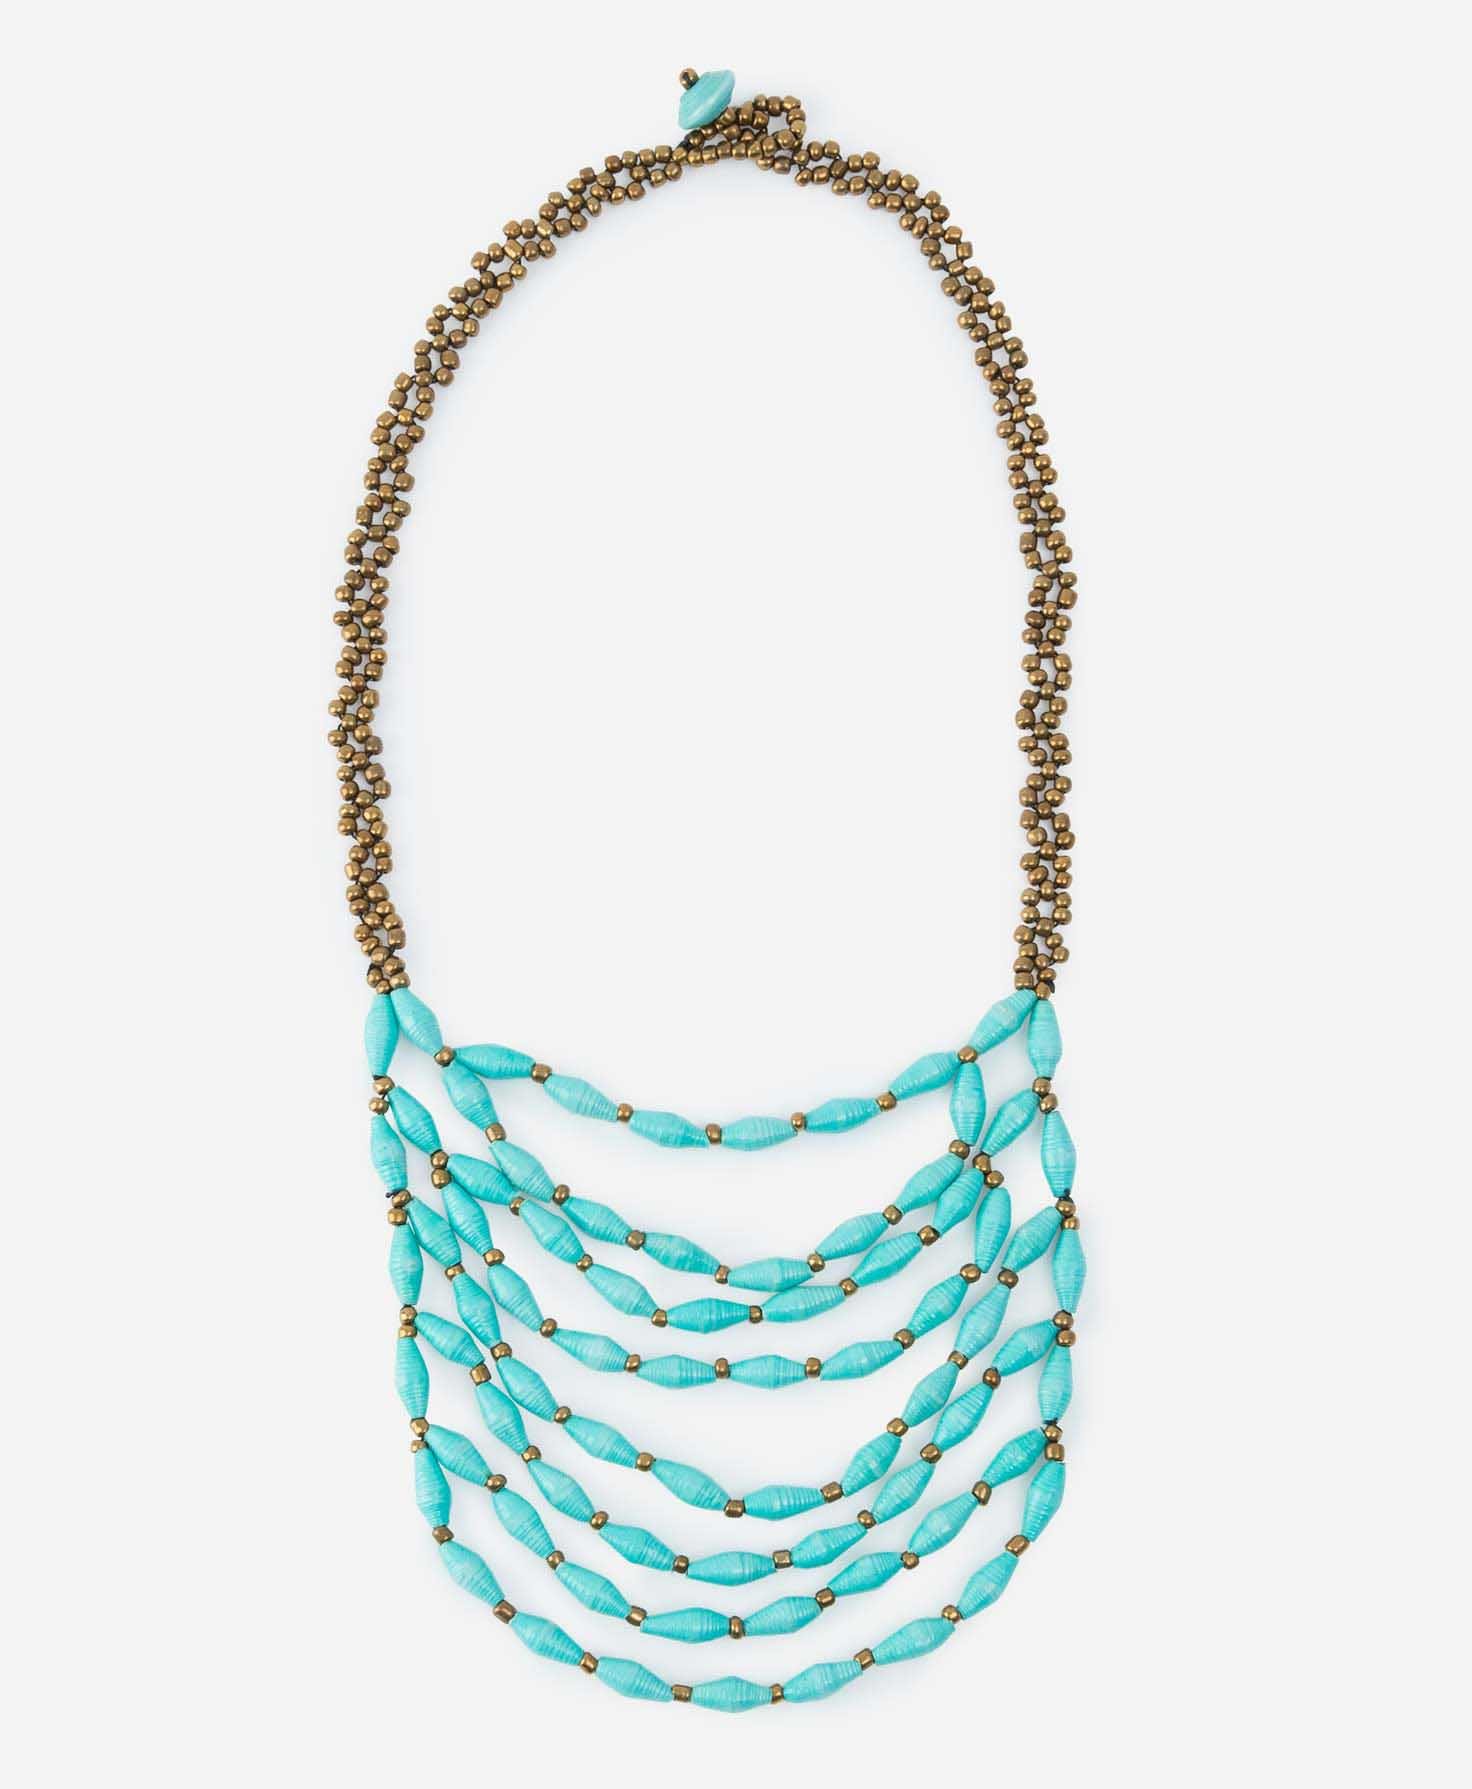 https://www.noondaycollection.info/img/product/latifa-necklace/latifa-necklace-large.jpg